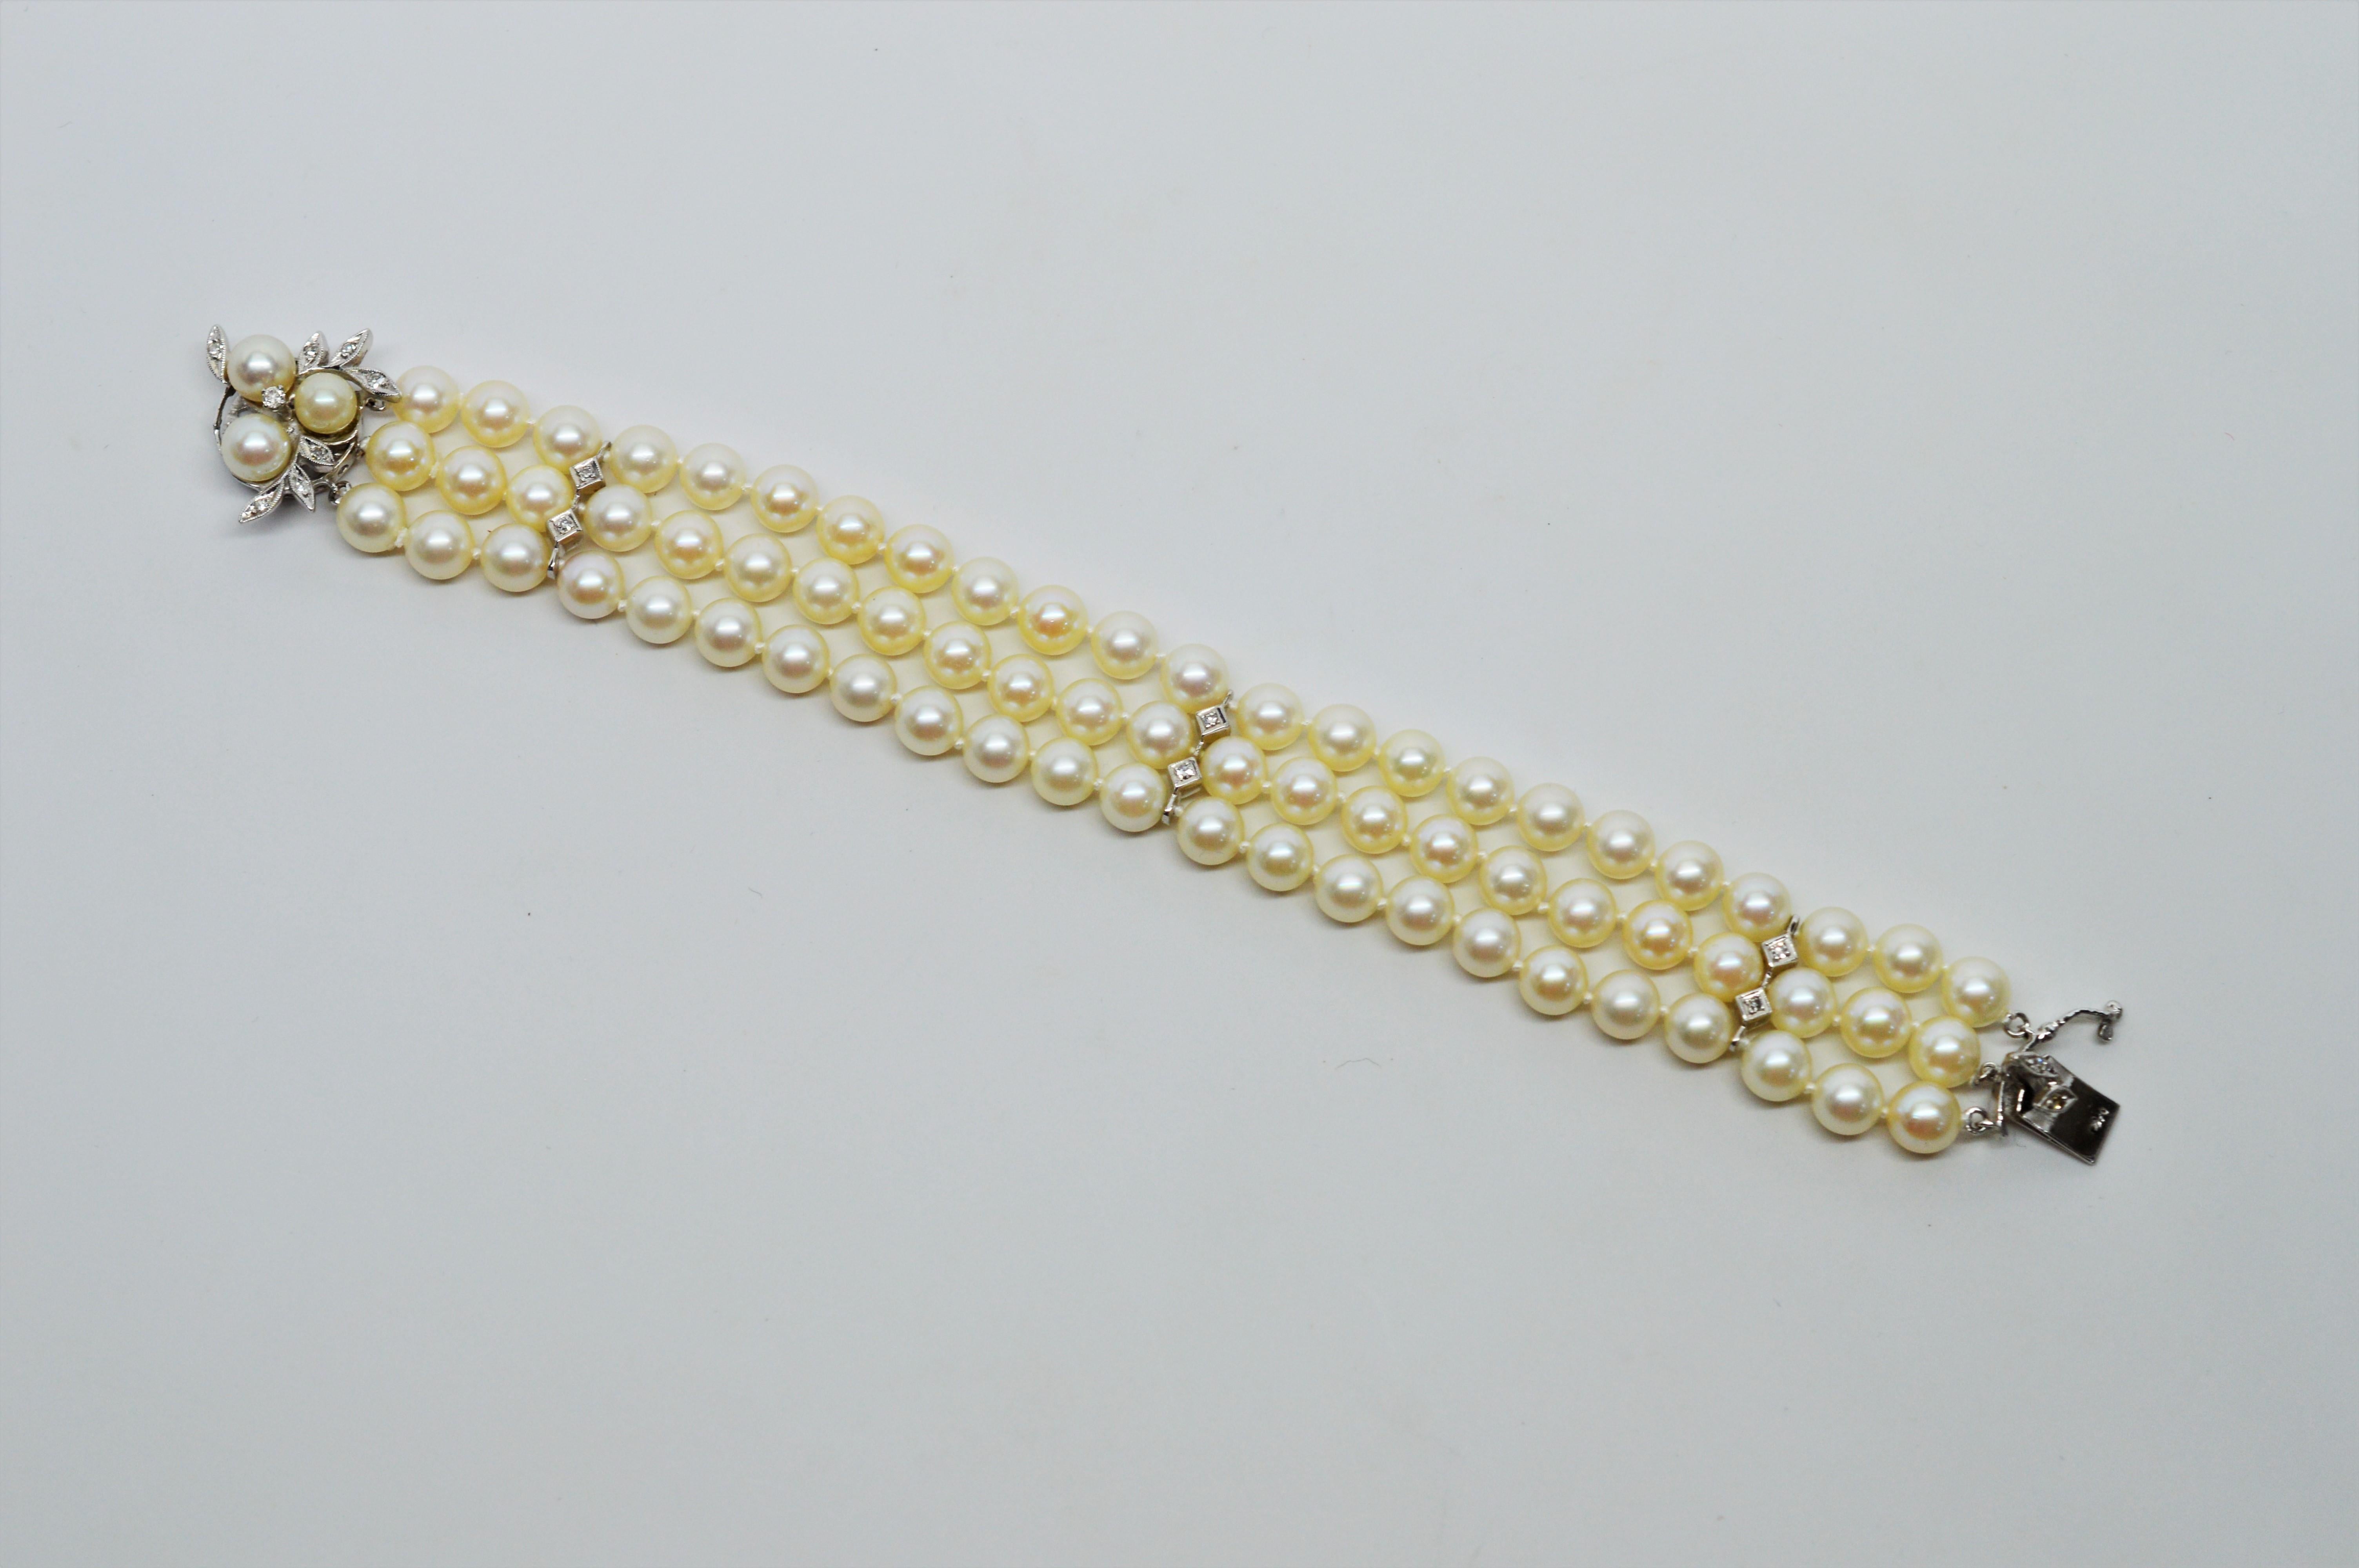 Brilliant Cut Triple Strand Akoya Pearl Bracelet w White Gold Diamond Floral Charm Clasp